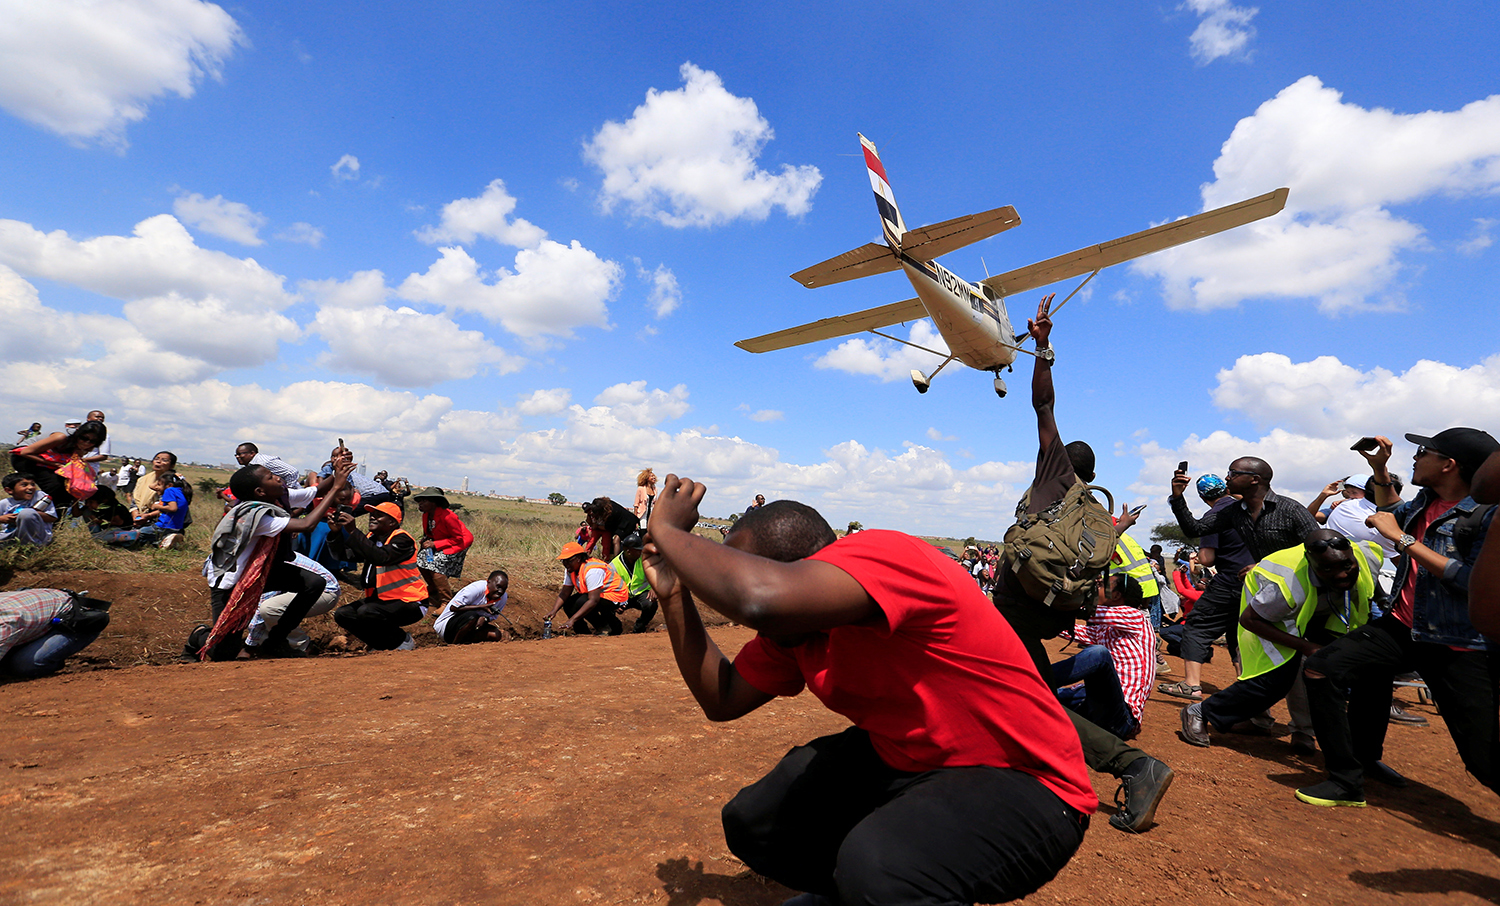 NAIROBI 2016-11-27 Spectators react as a plane flies over them during the Vintage Air Rally at the Nairobi national park in Kenya's capital Nairobi, November 27, 2016. REUTERS/Thomas Mukoya TPX IMAGES OF THE DAY Photo: / REUTERS / TT / kod 72000